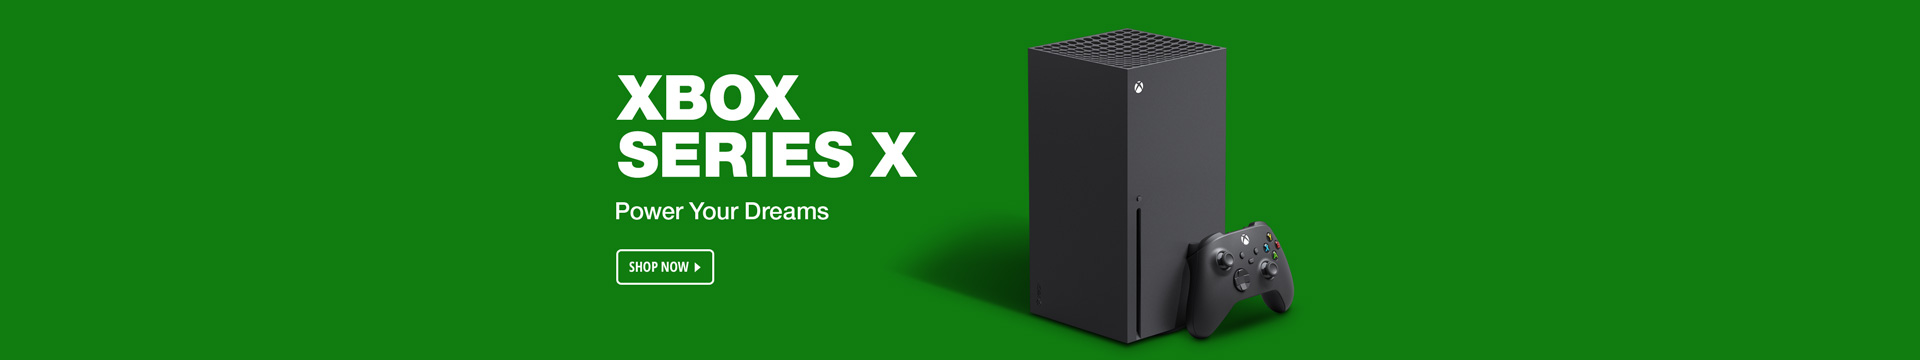 xbox series x sound card